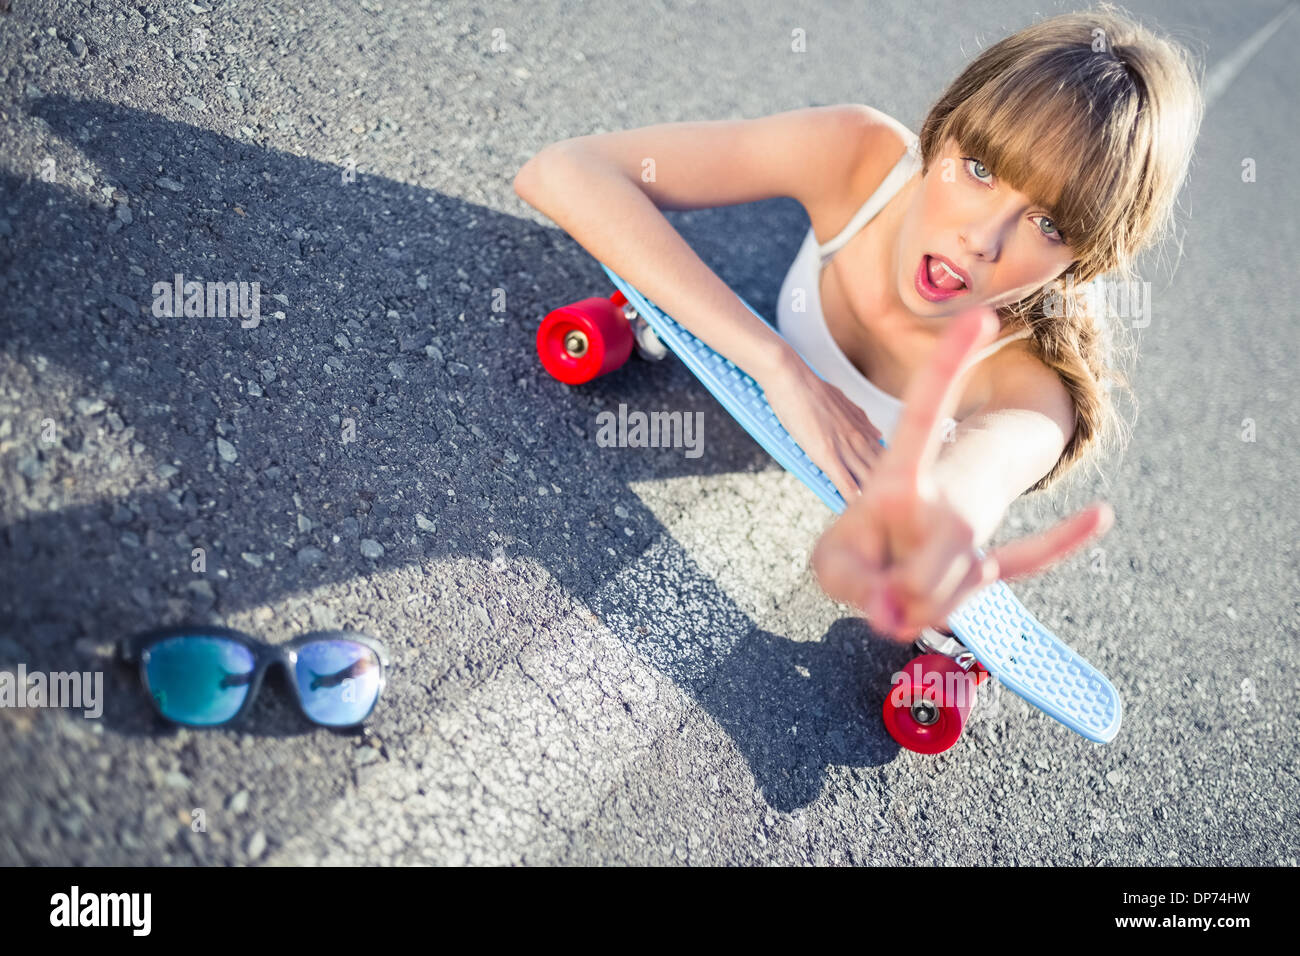 Coole Skater-Girl Rock'n'Roll Handbewegung zu tun Stockfoto